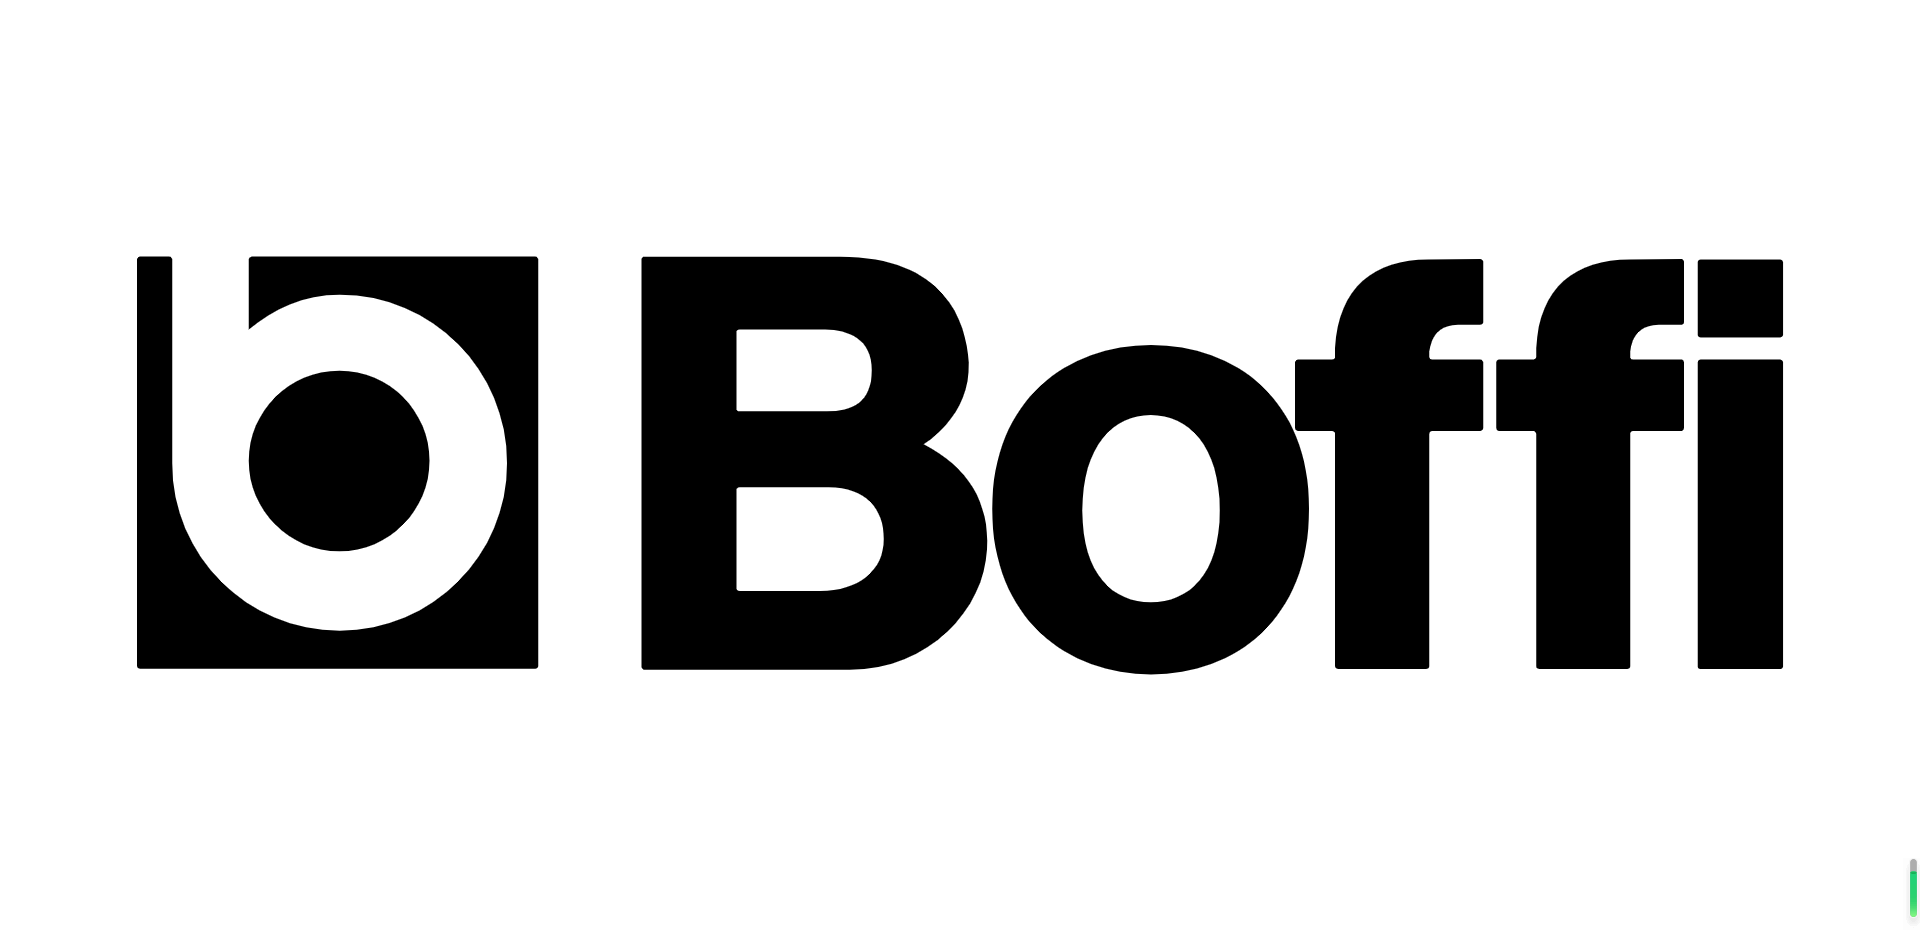 Boffi logo